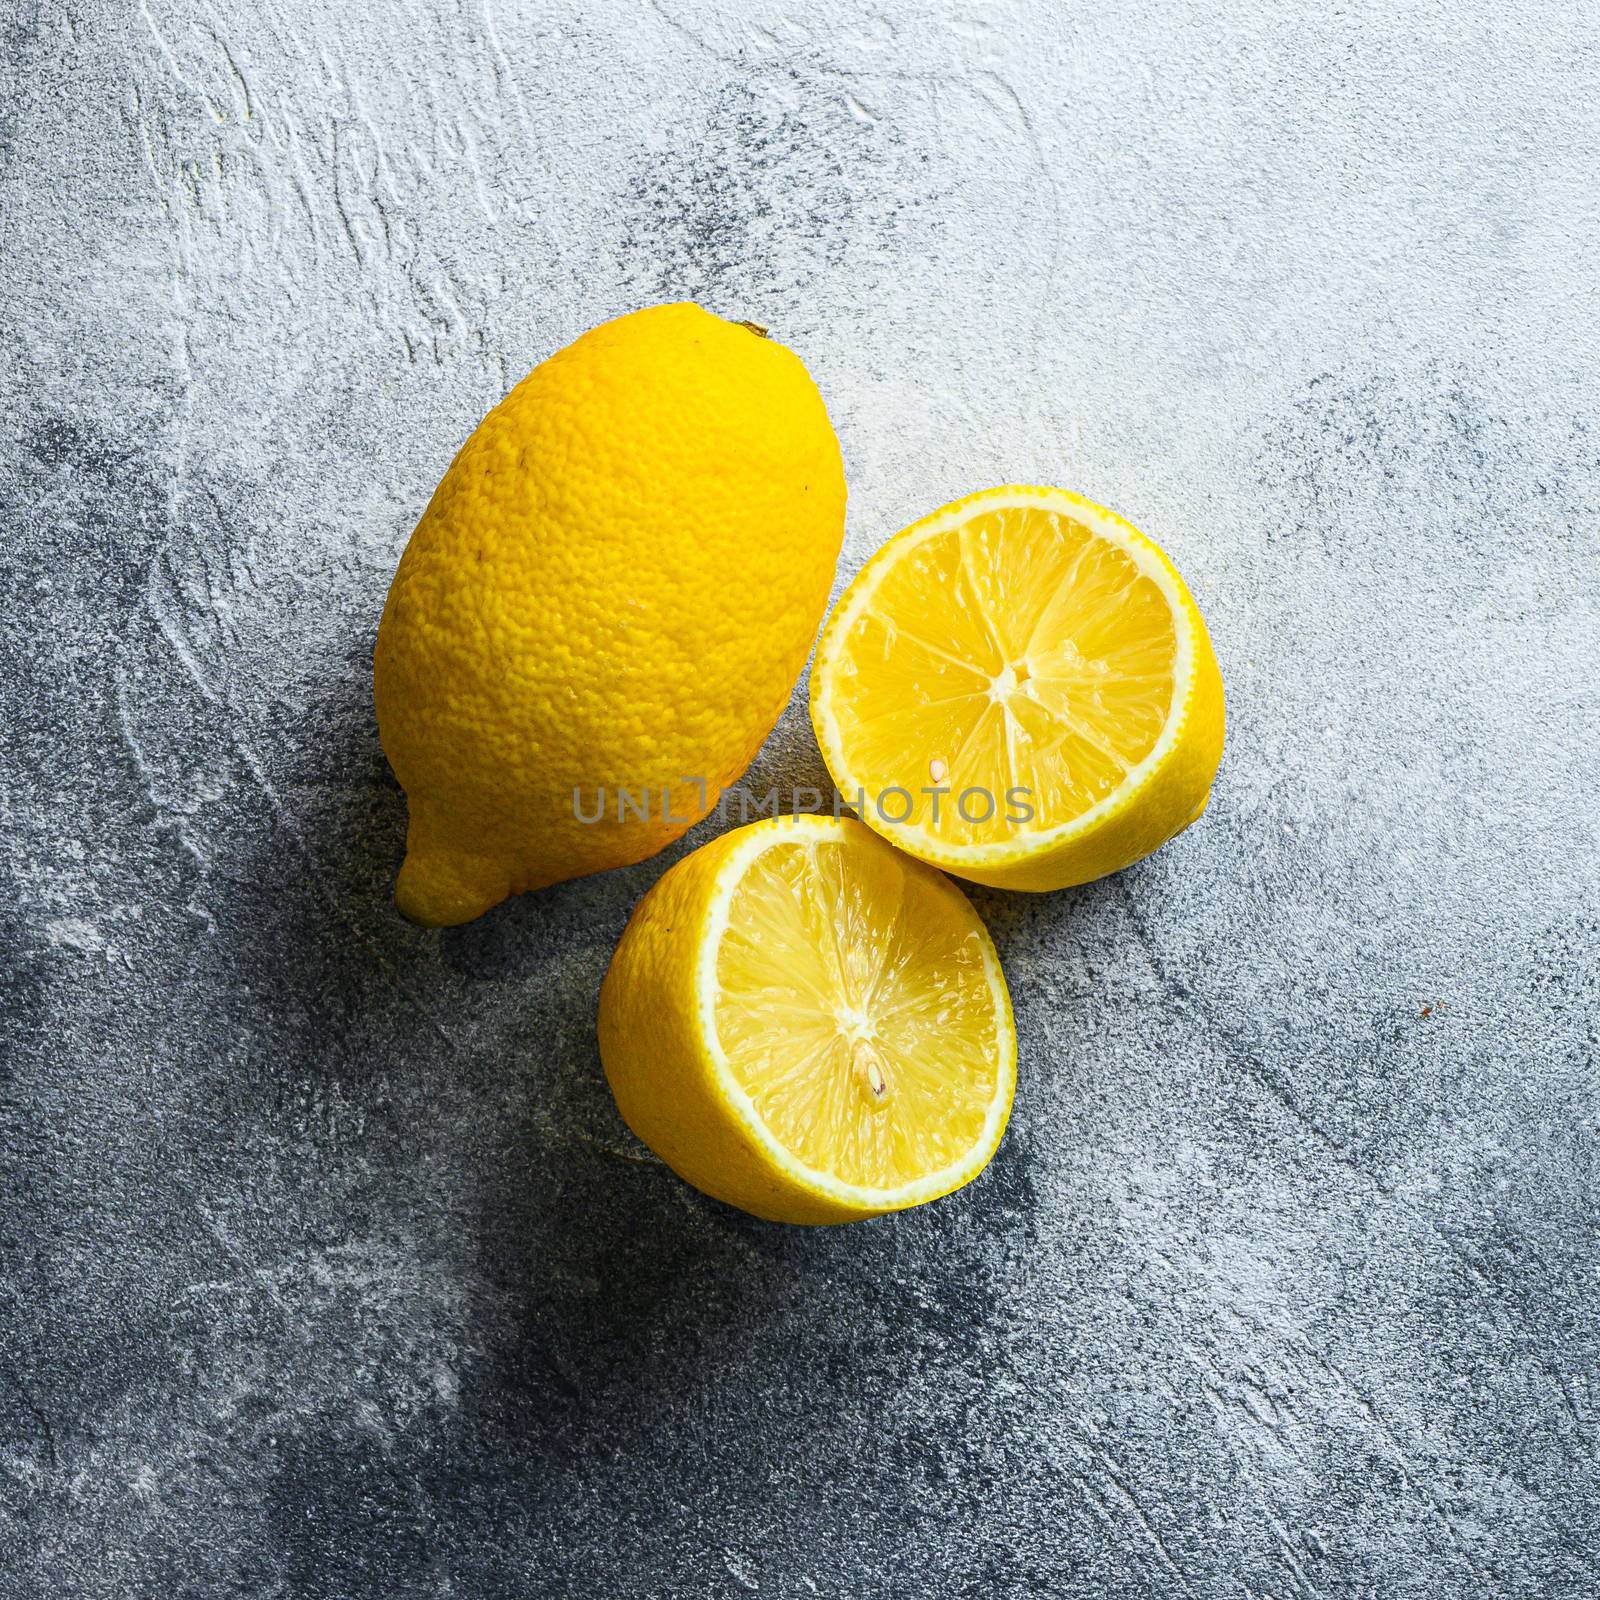 Ripe juicy Lemon curd on gray background. Whole yellow lemon and lemon cut half, top view, vitamin c source.